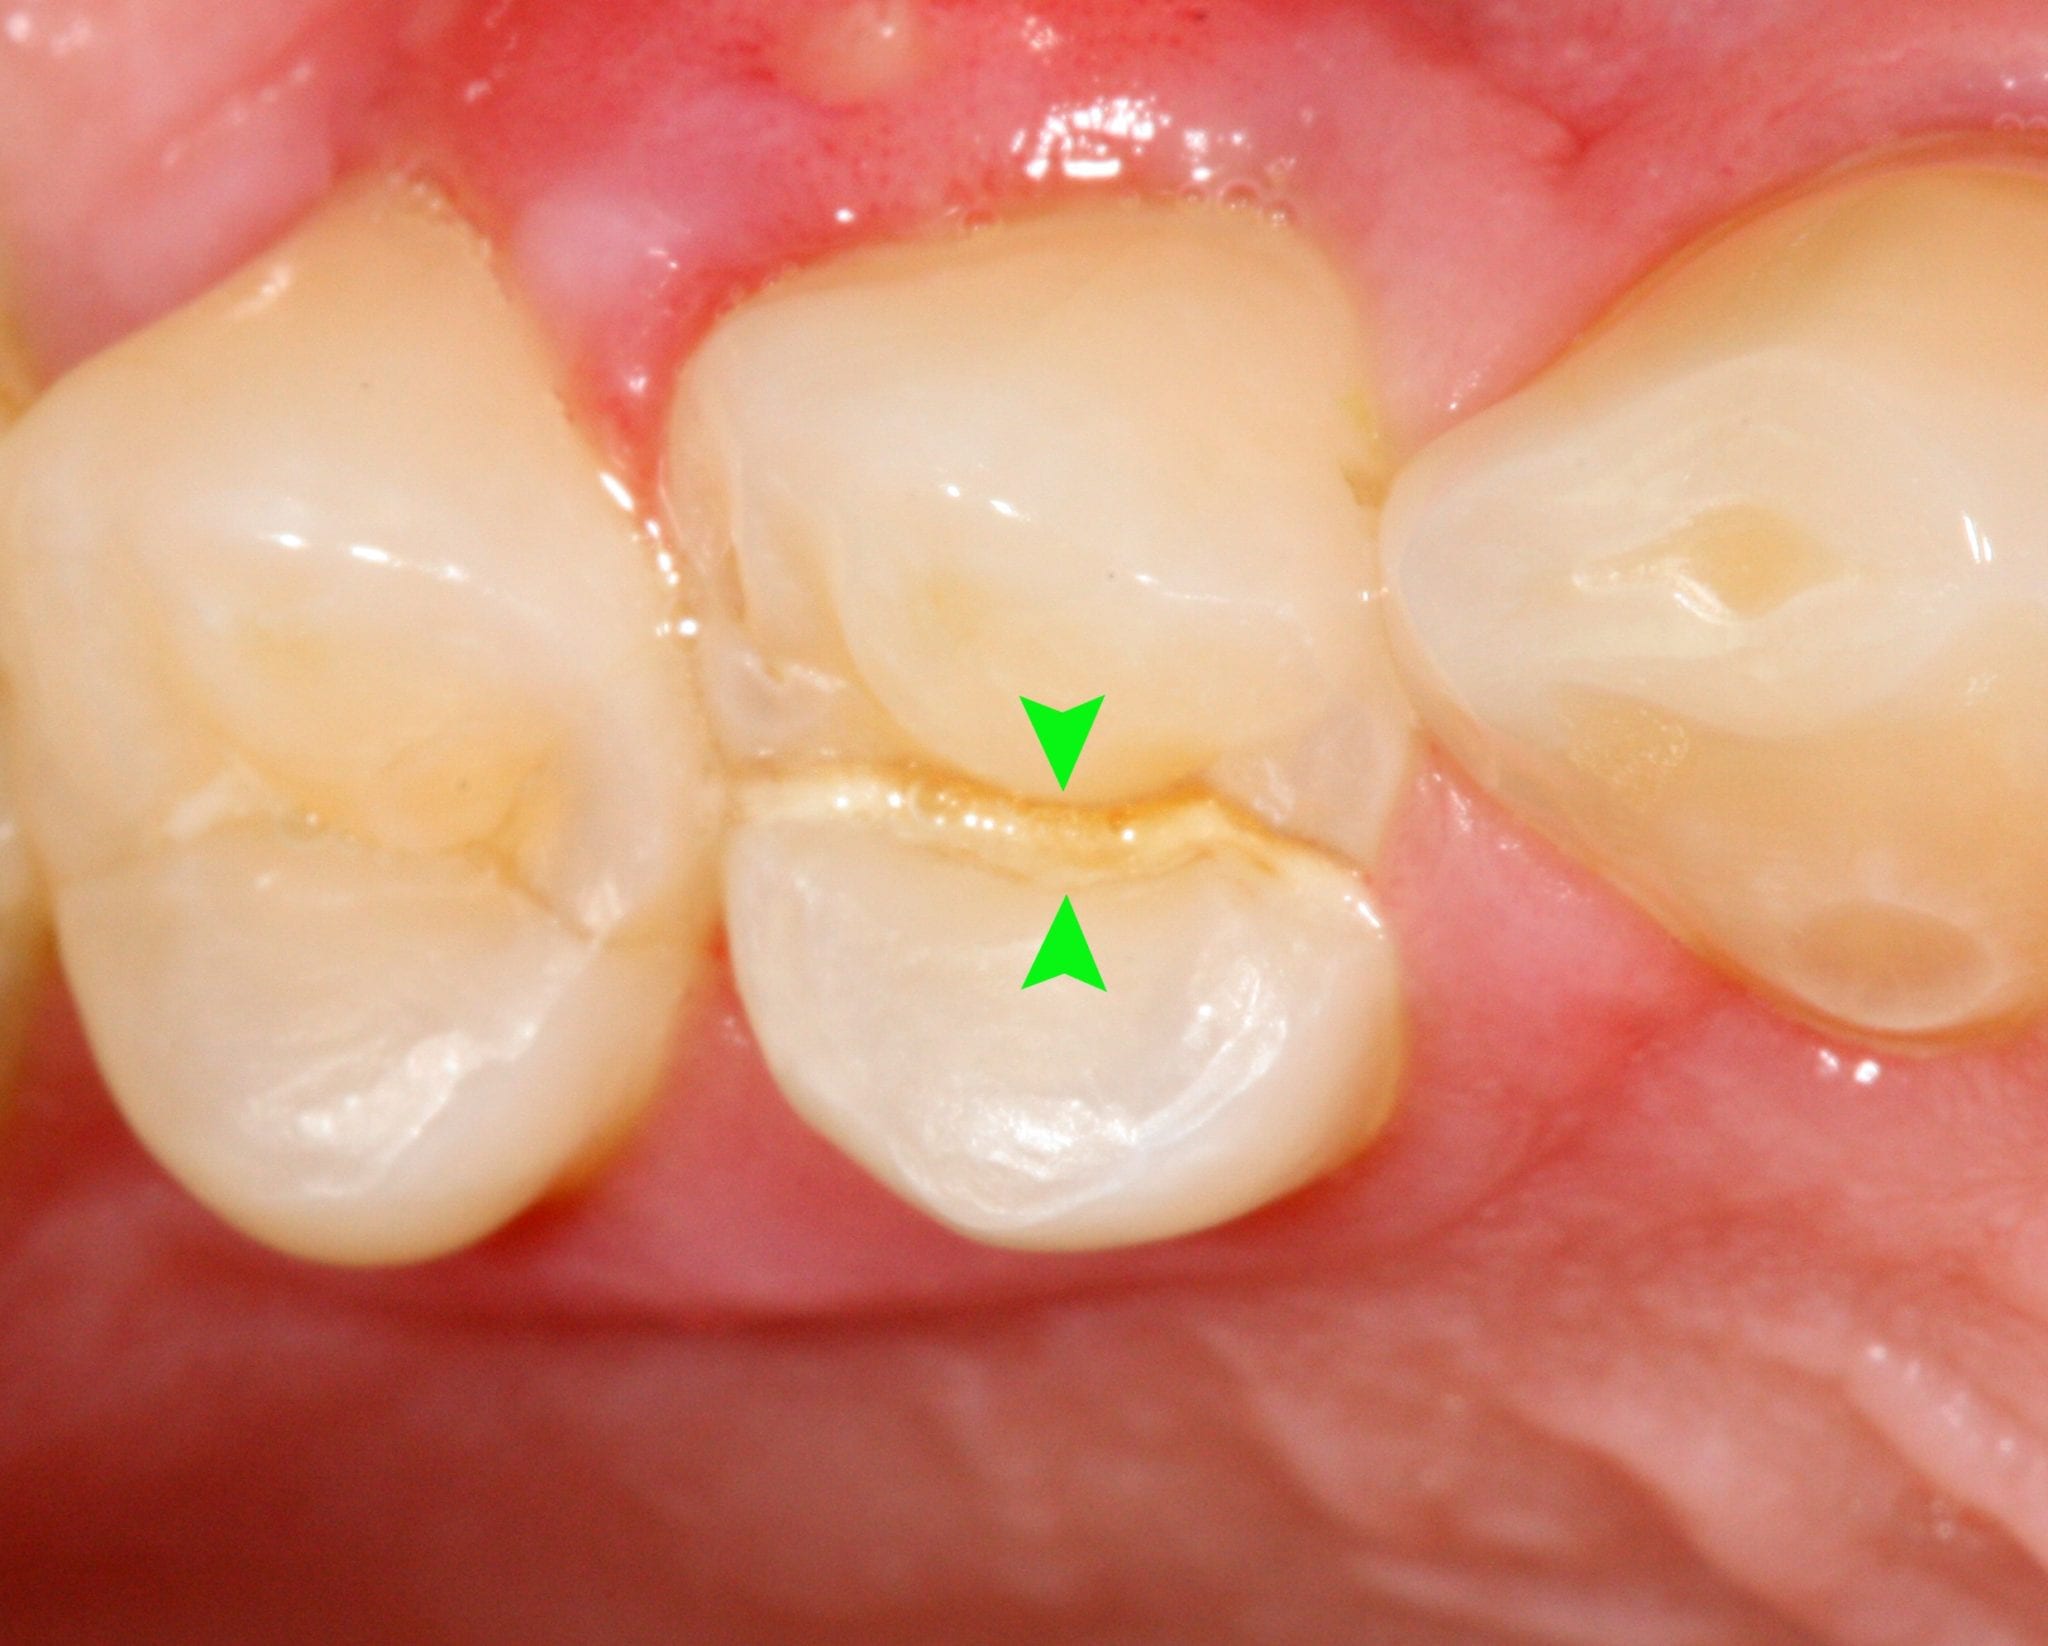 cracked molar